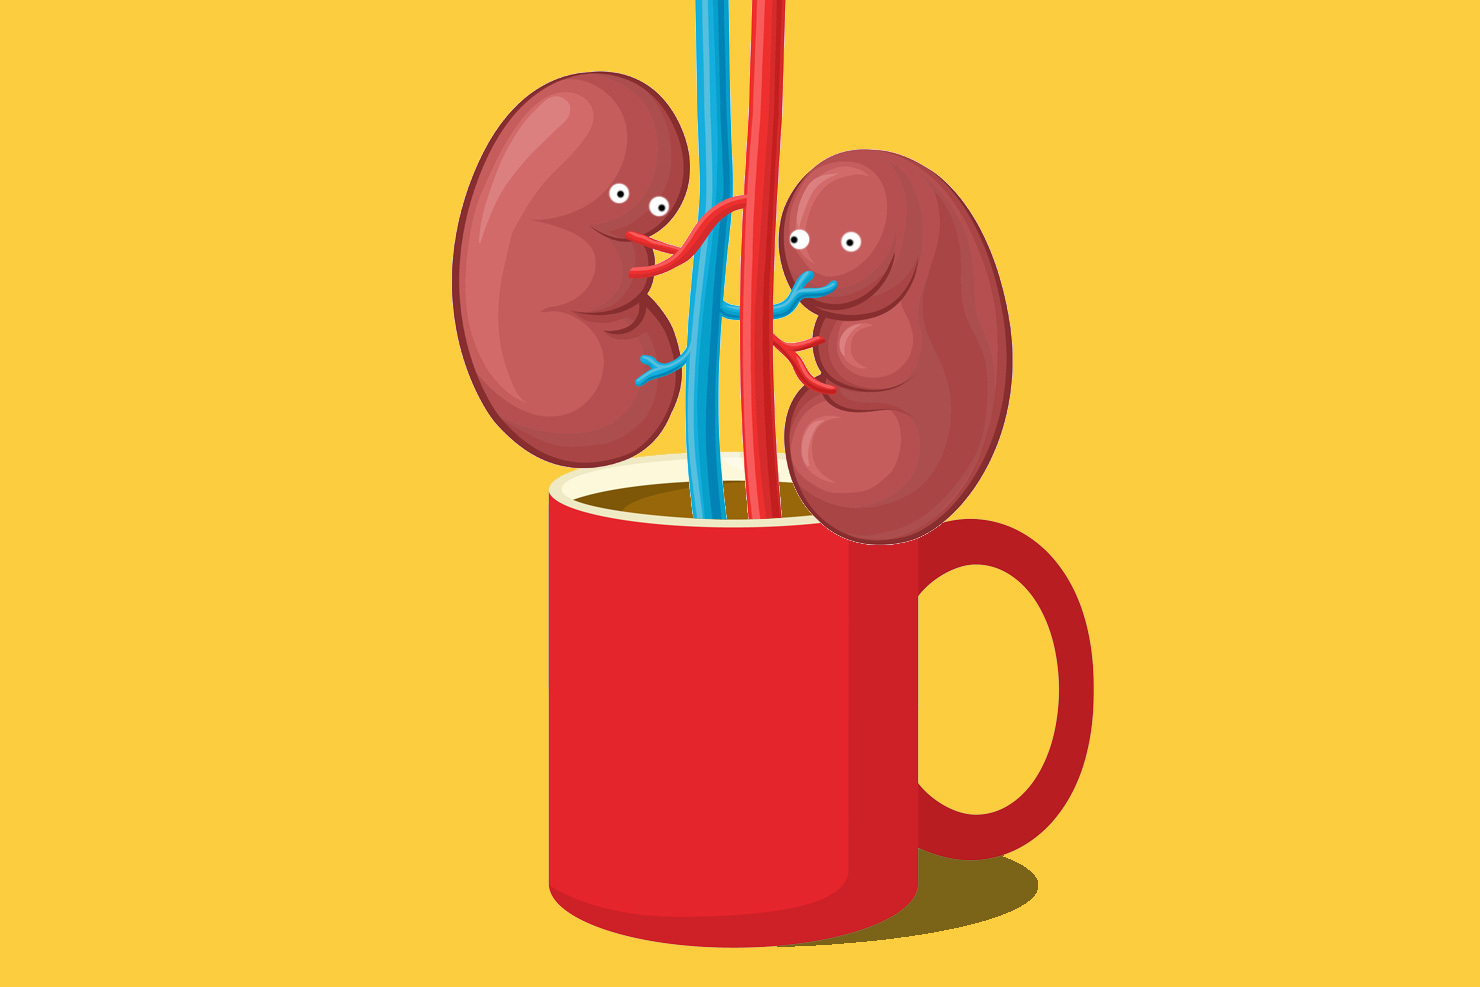 kidneys coffee